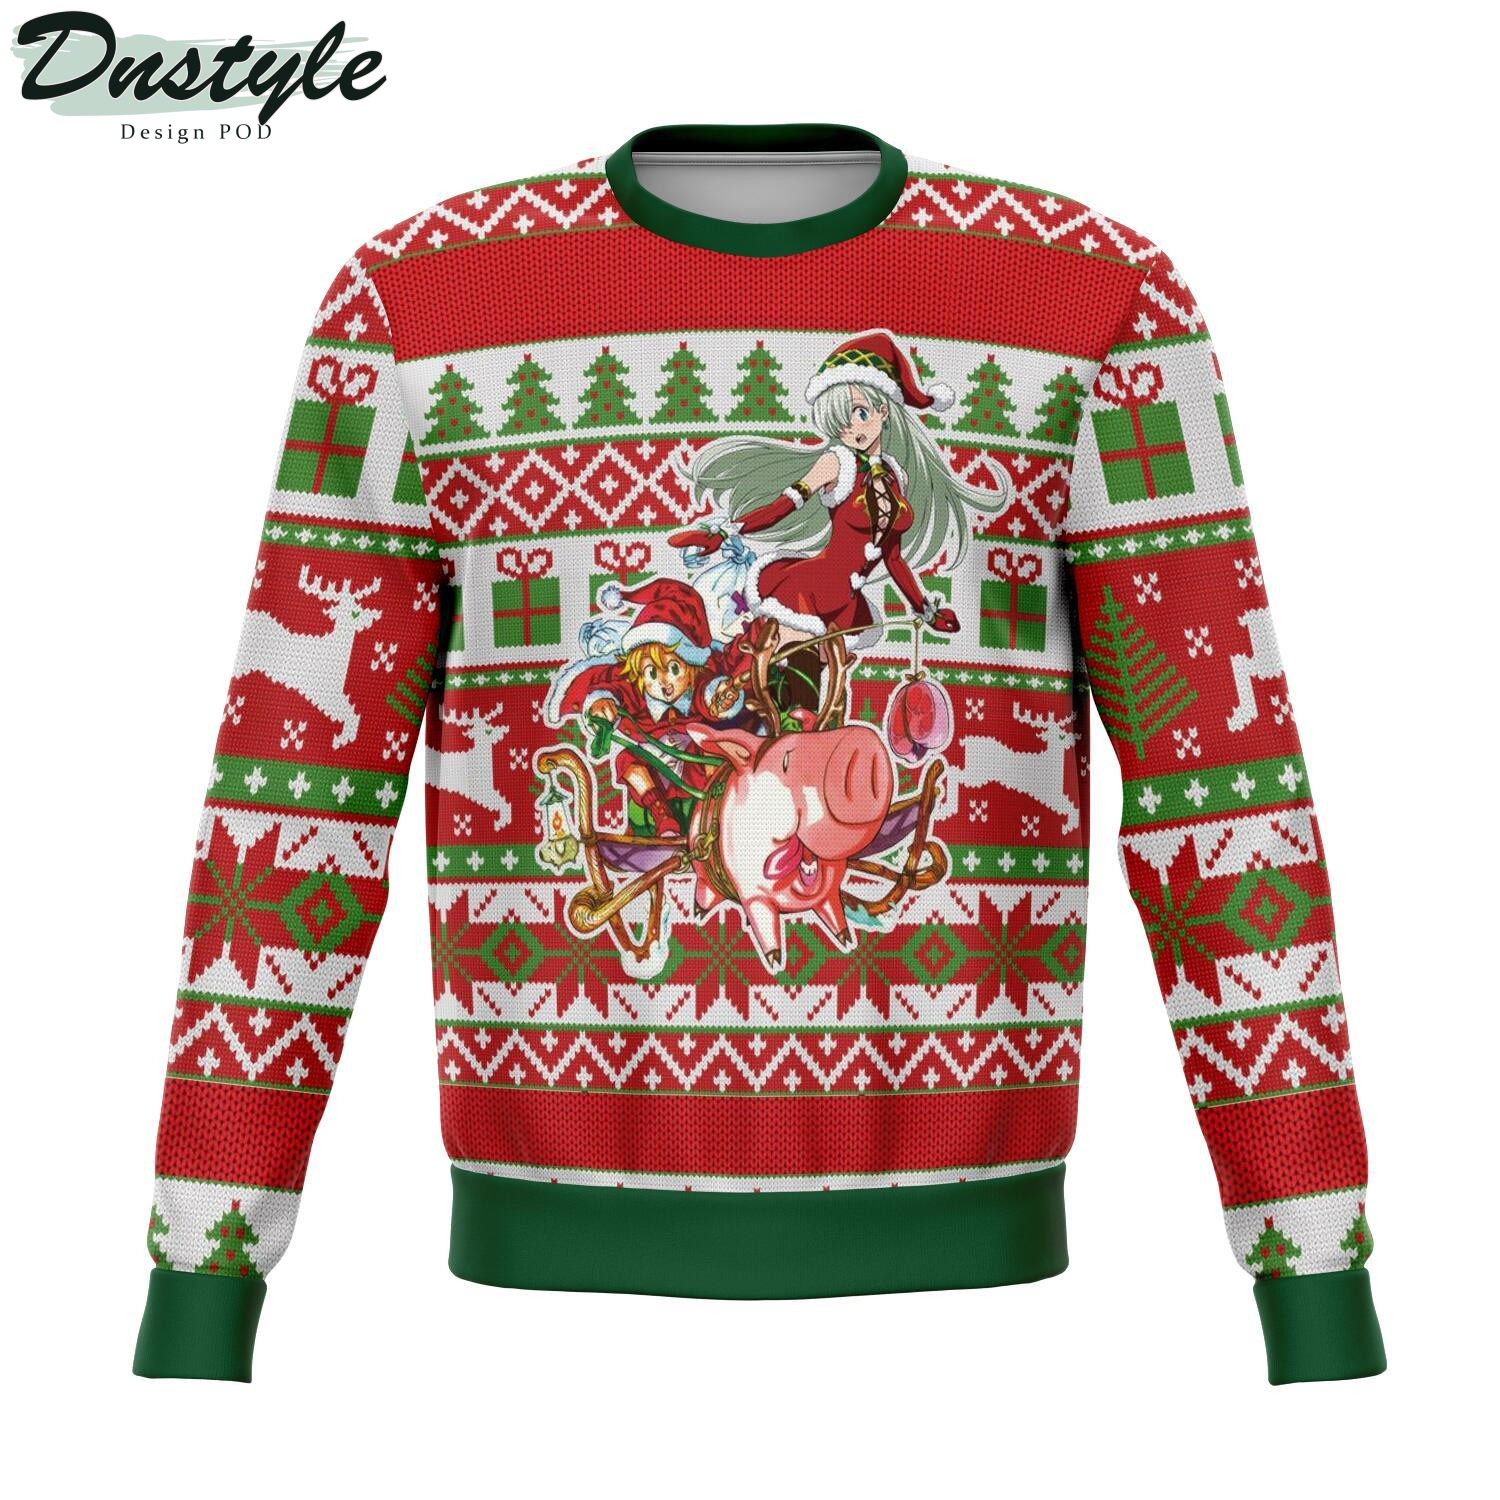 Cardcaptor Sakura Cerberus Everything Will Be Alright Ugly Christmas Sweater